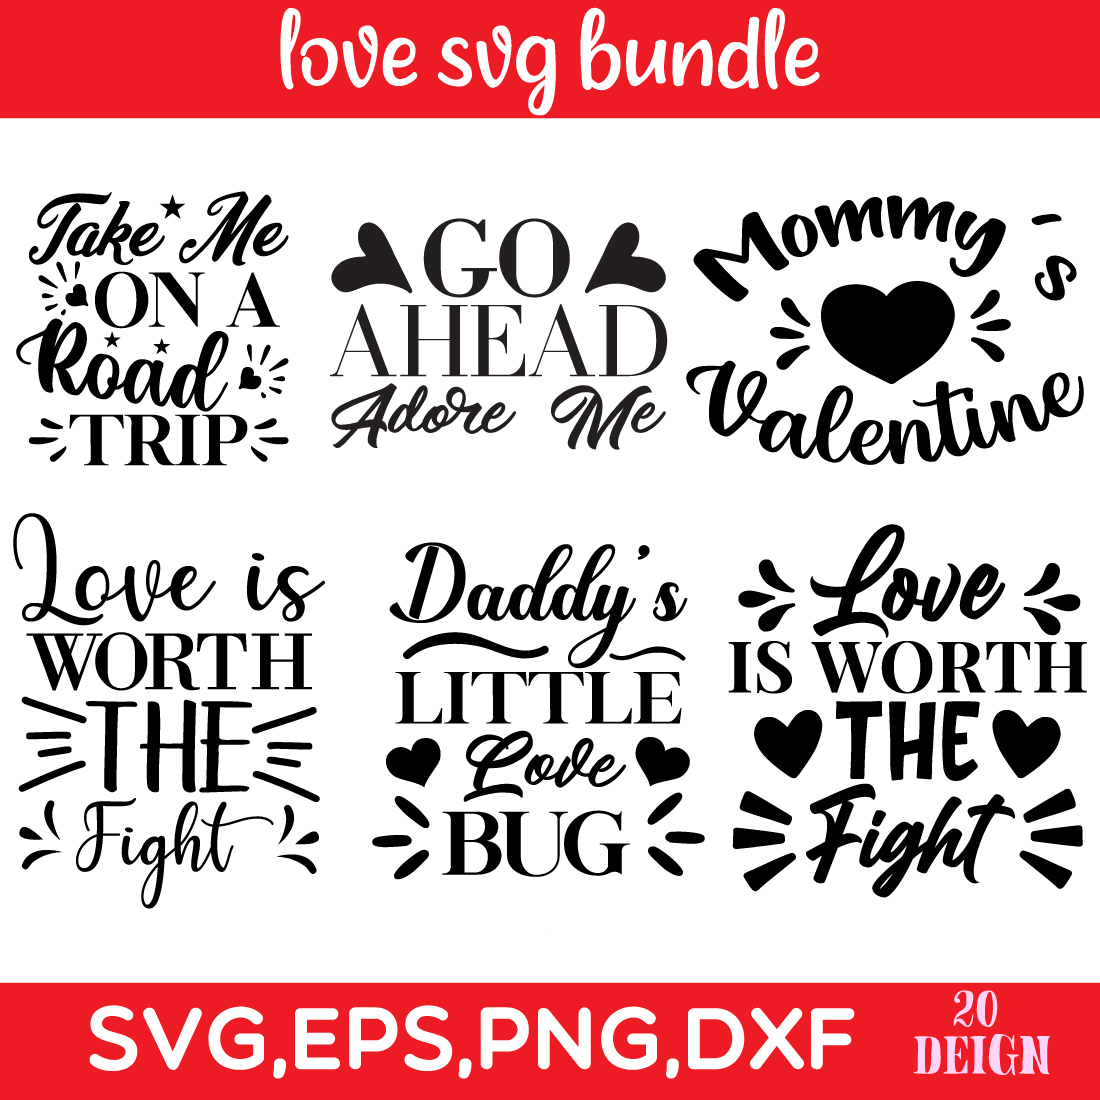 Love SVG Bundle preview image.